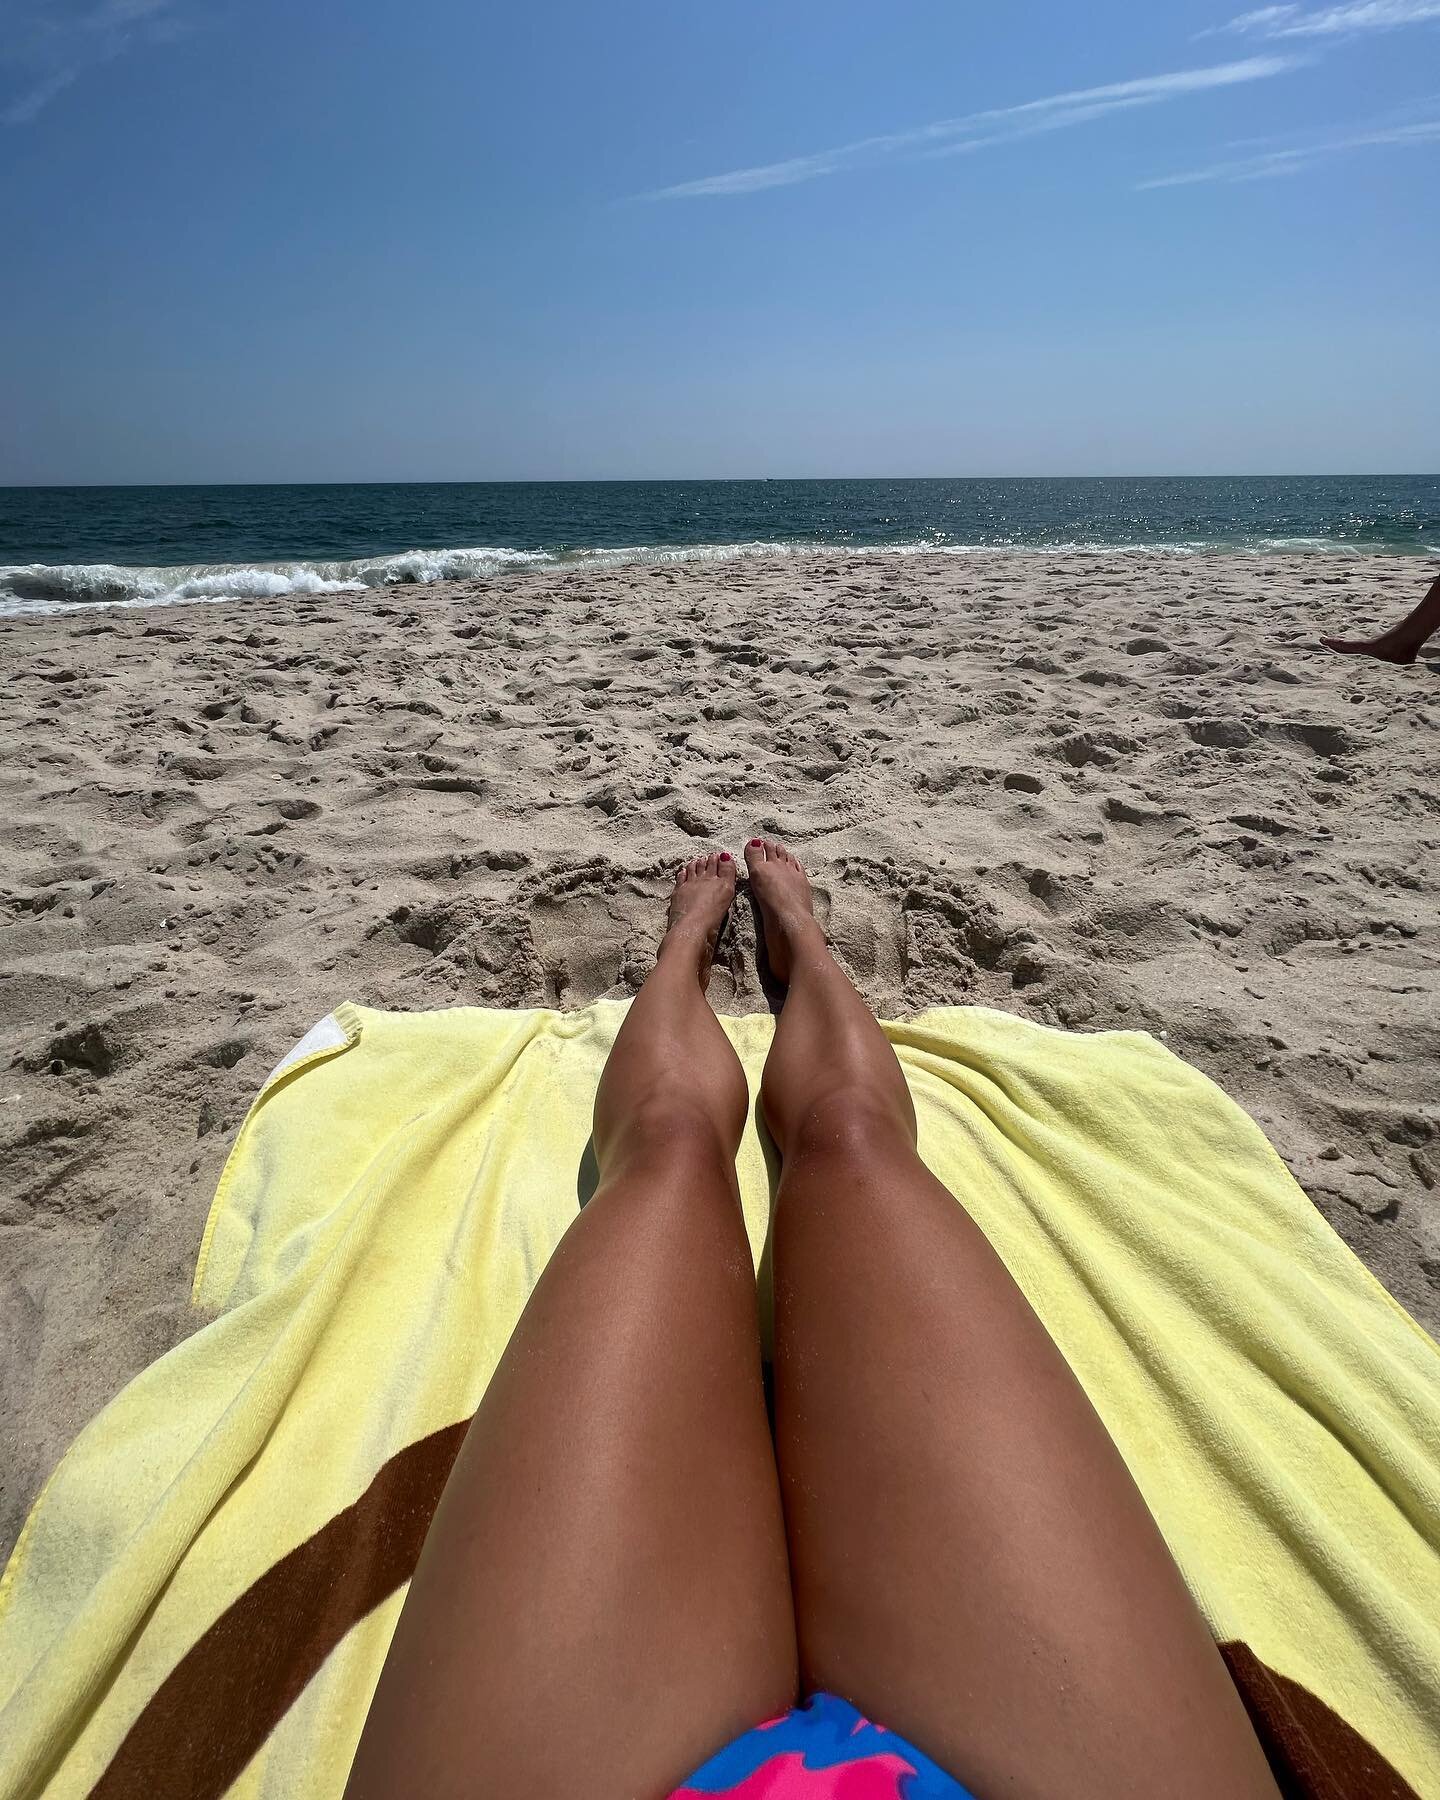 Nothing beats sunny beach days 😎🏝️ #sunnyvacation #summer #lymphdrainage #snatched #yorkvillemassage #fireisland #beachdays #vacationvibes #tanning #oceanbeach #massagetherapy #rmt